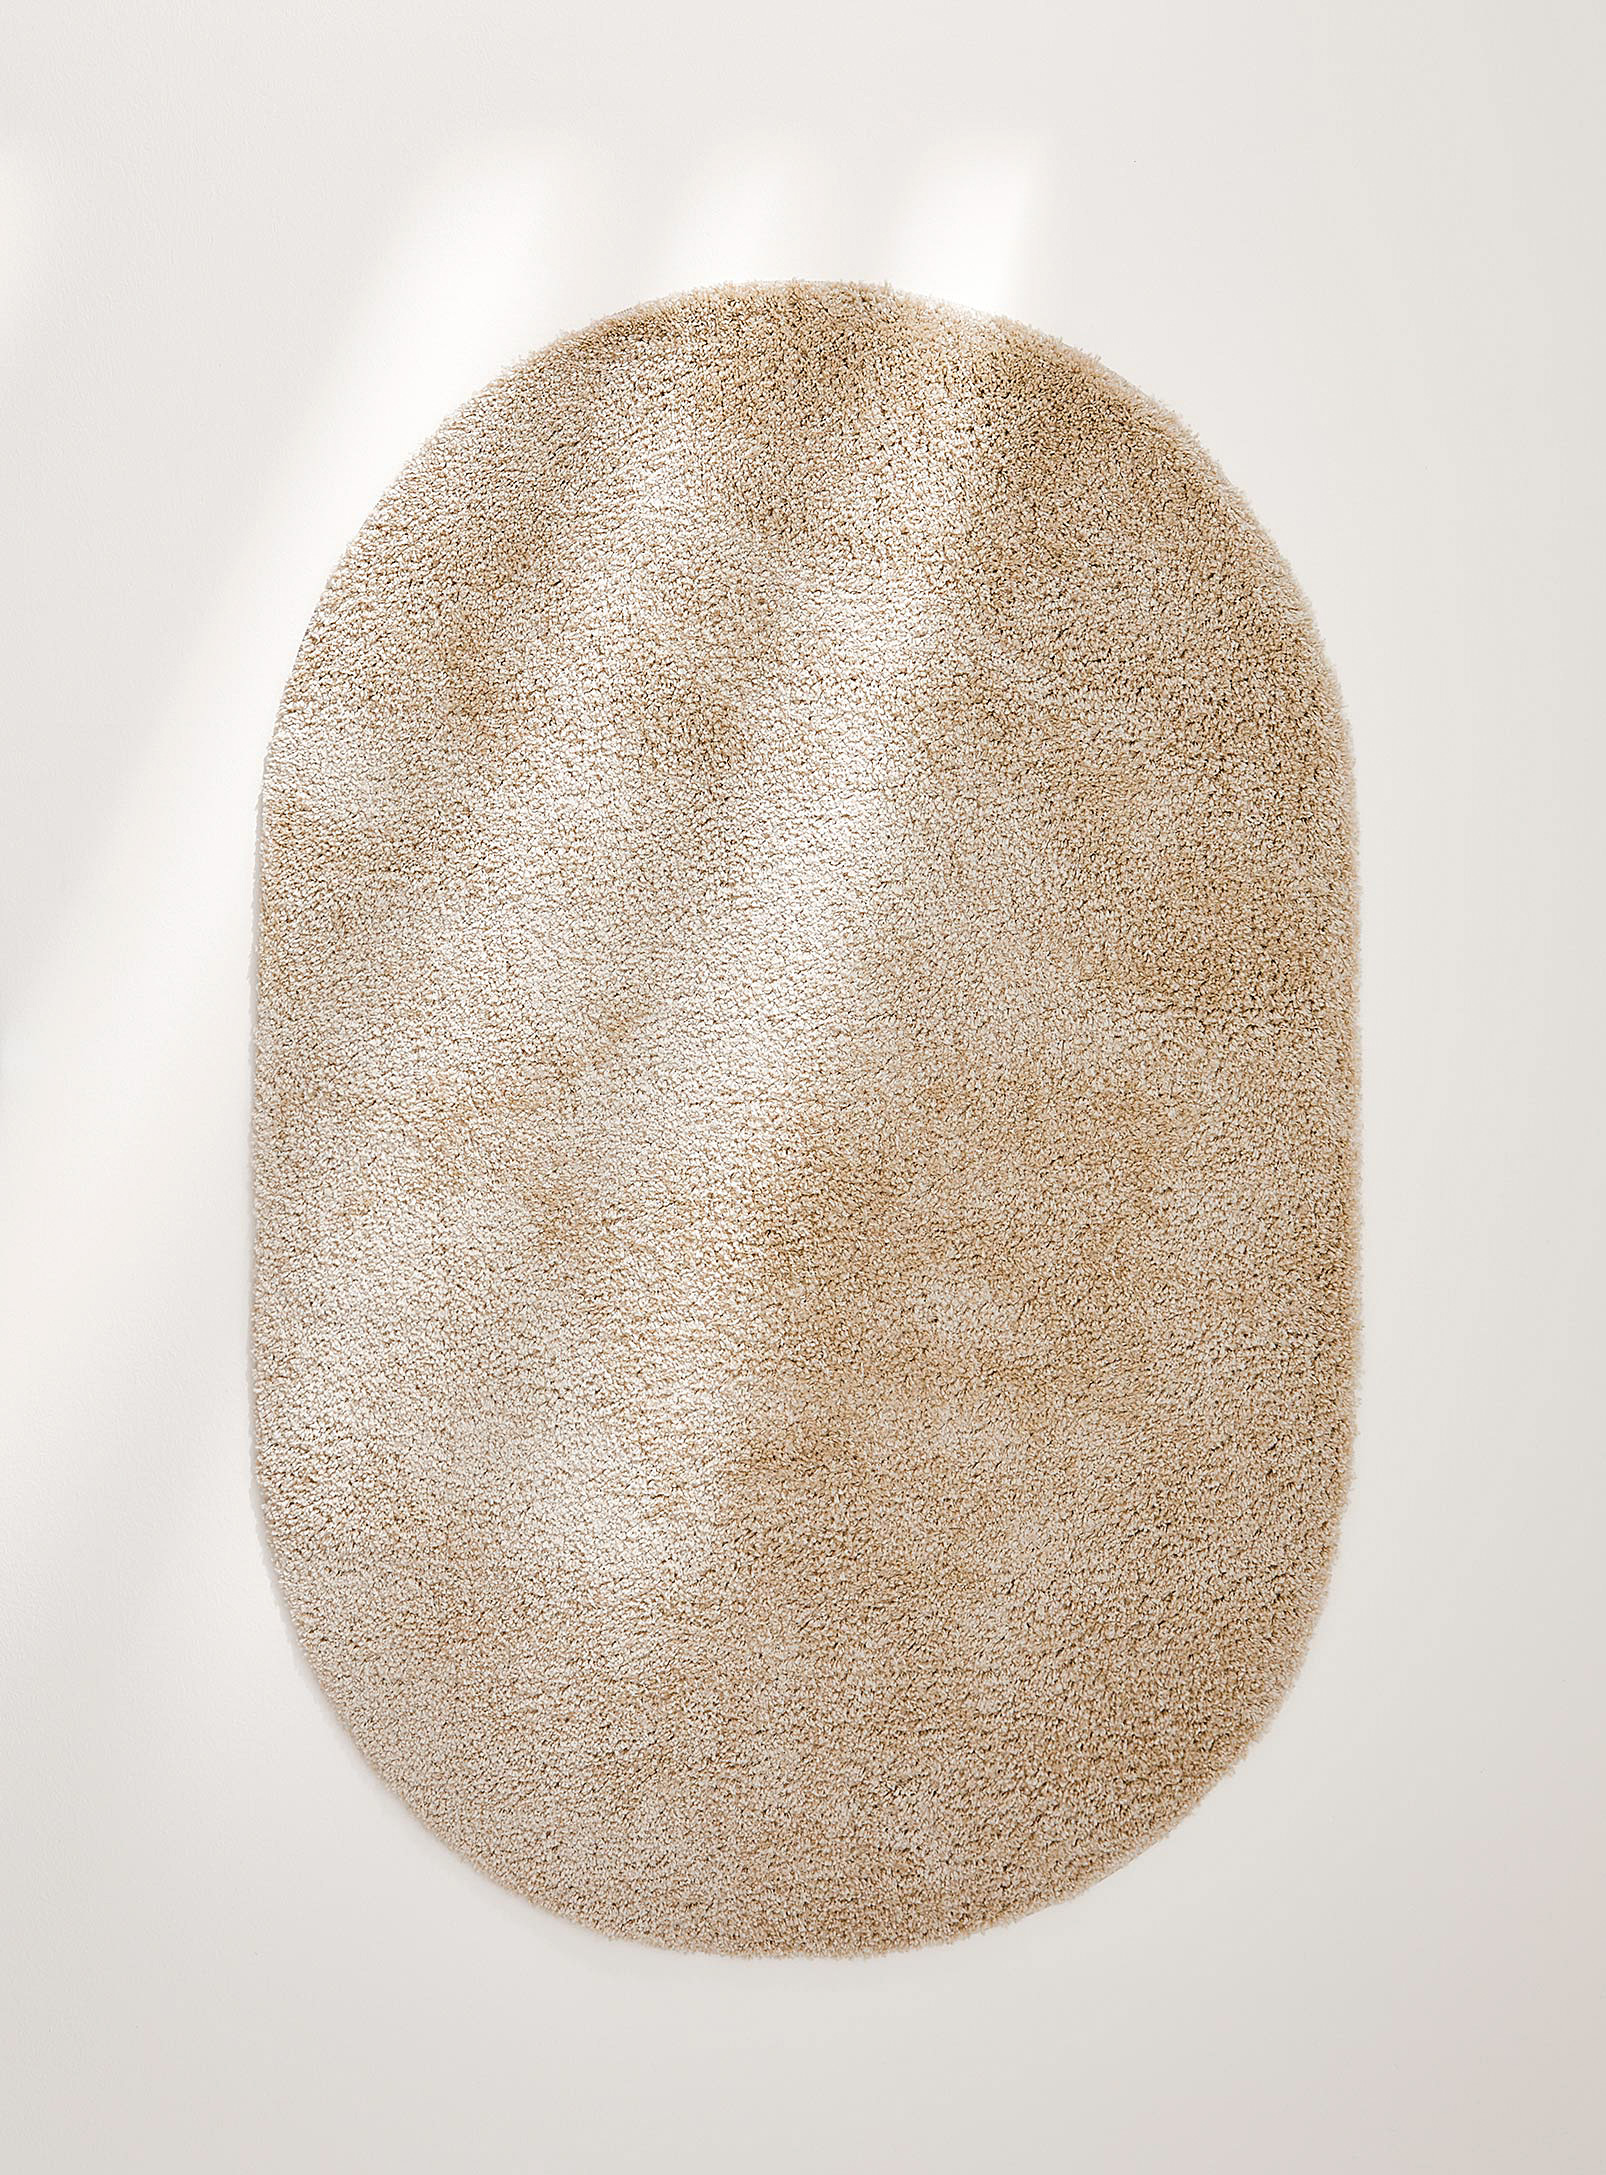 Simons Maison Nature's Essence Oval Shag Rug 120 X 180 Cm In Cream Beige